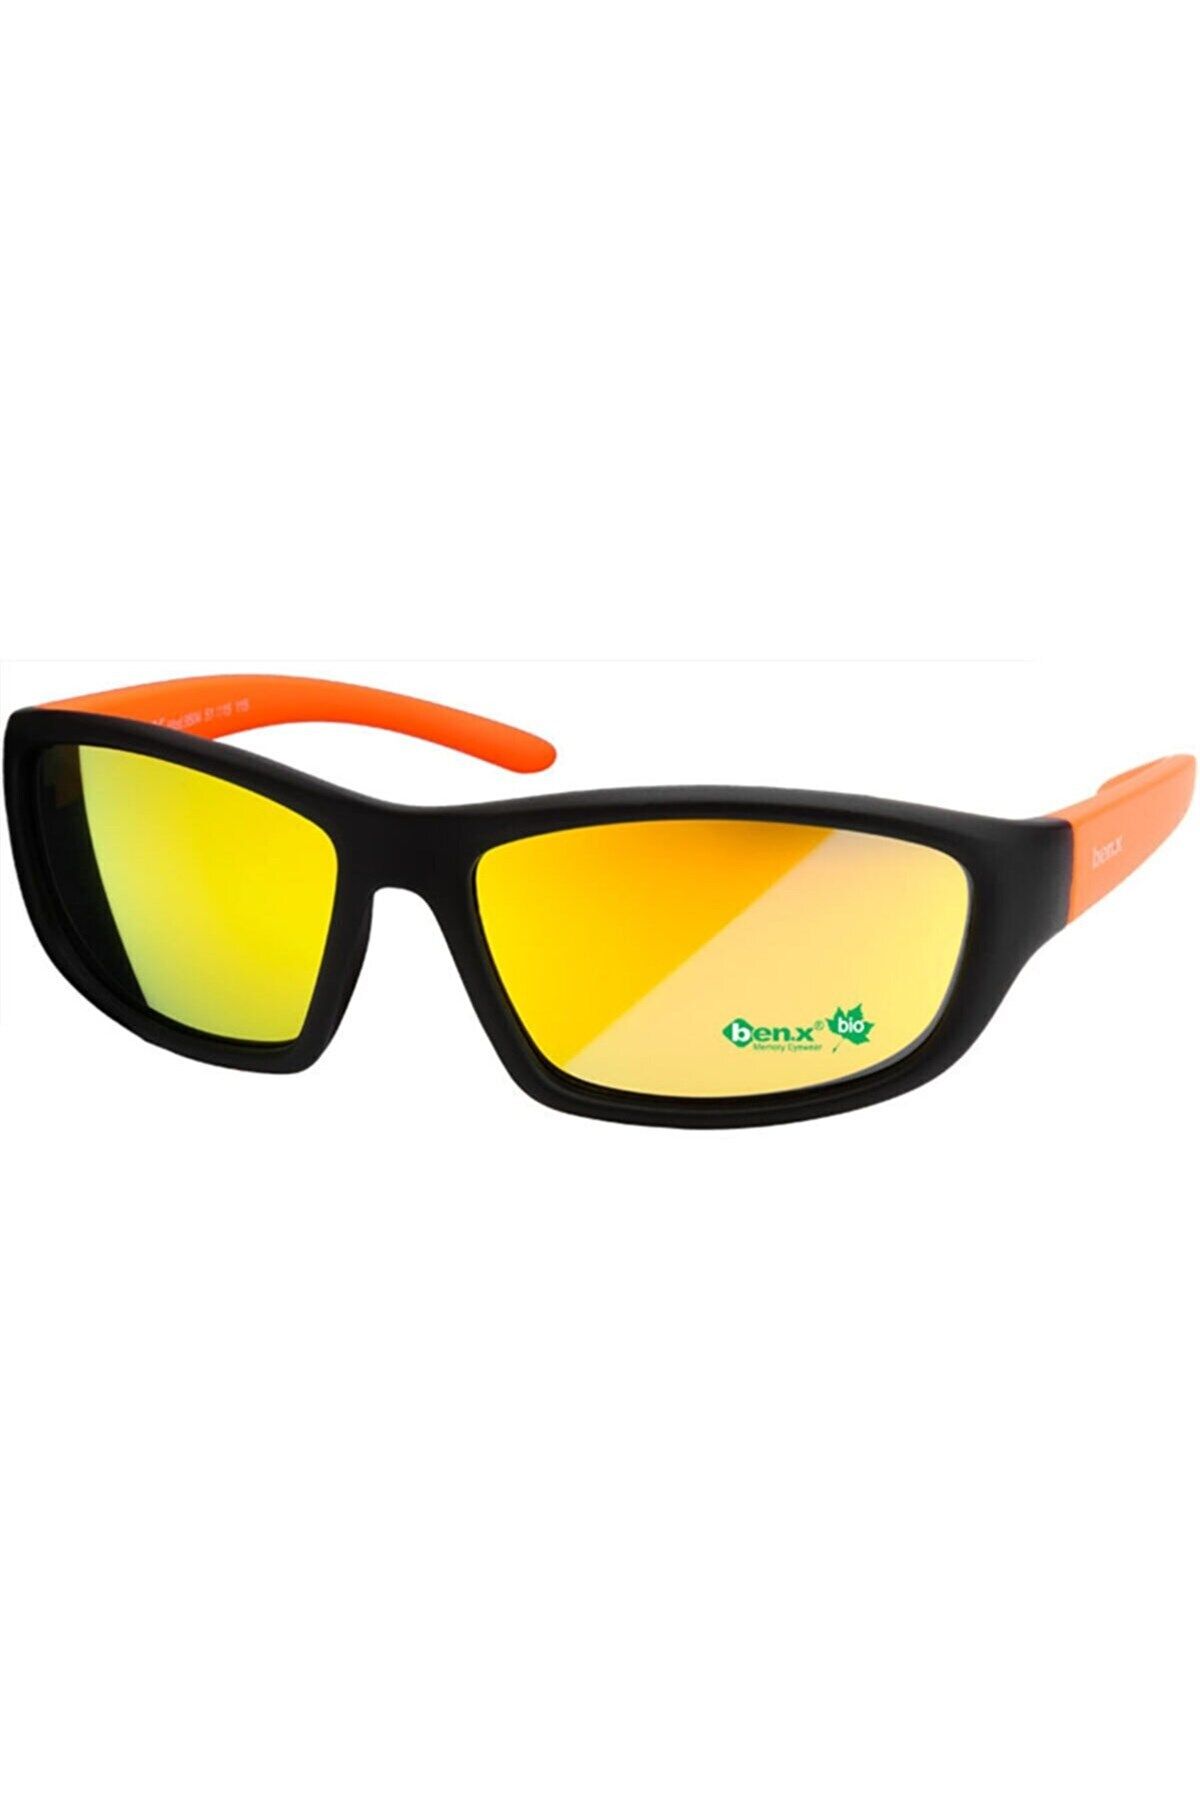 Benx Sunglasses Benx Bxs 9504-m0685 Çocuk Güneş Gözlüğü